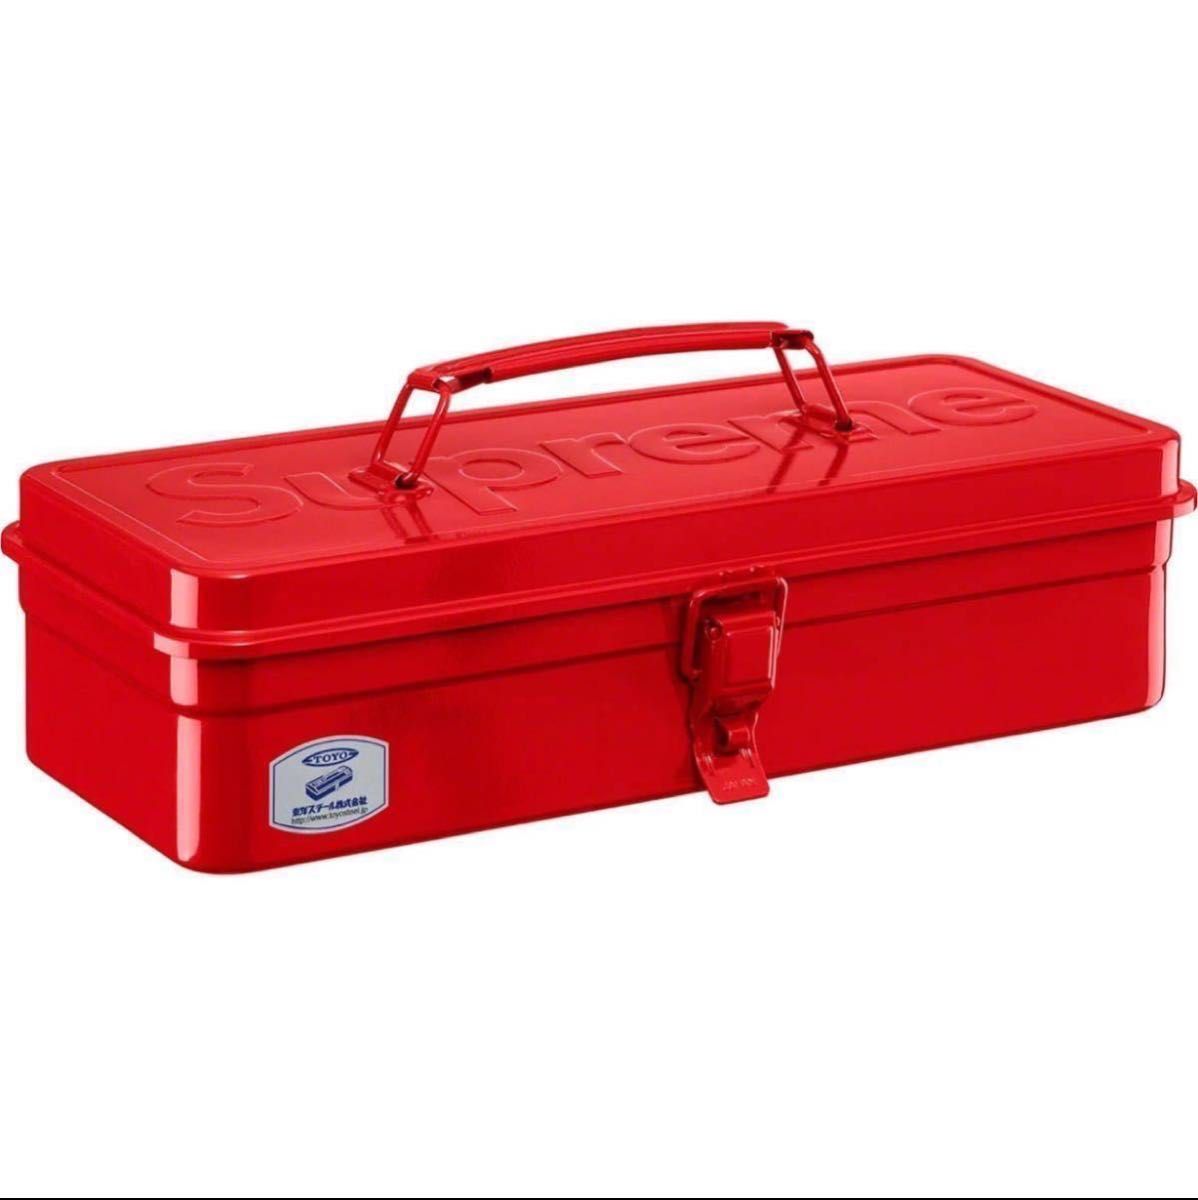 22AW 23 新品 Supreme シュプリーム TOYO STEEL TOOL BOX ツールボックス 道具箱 RED 